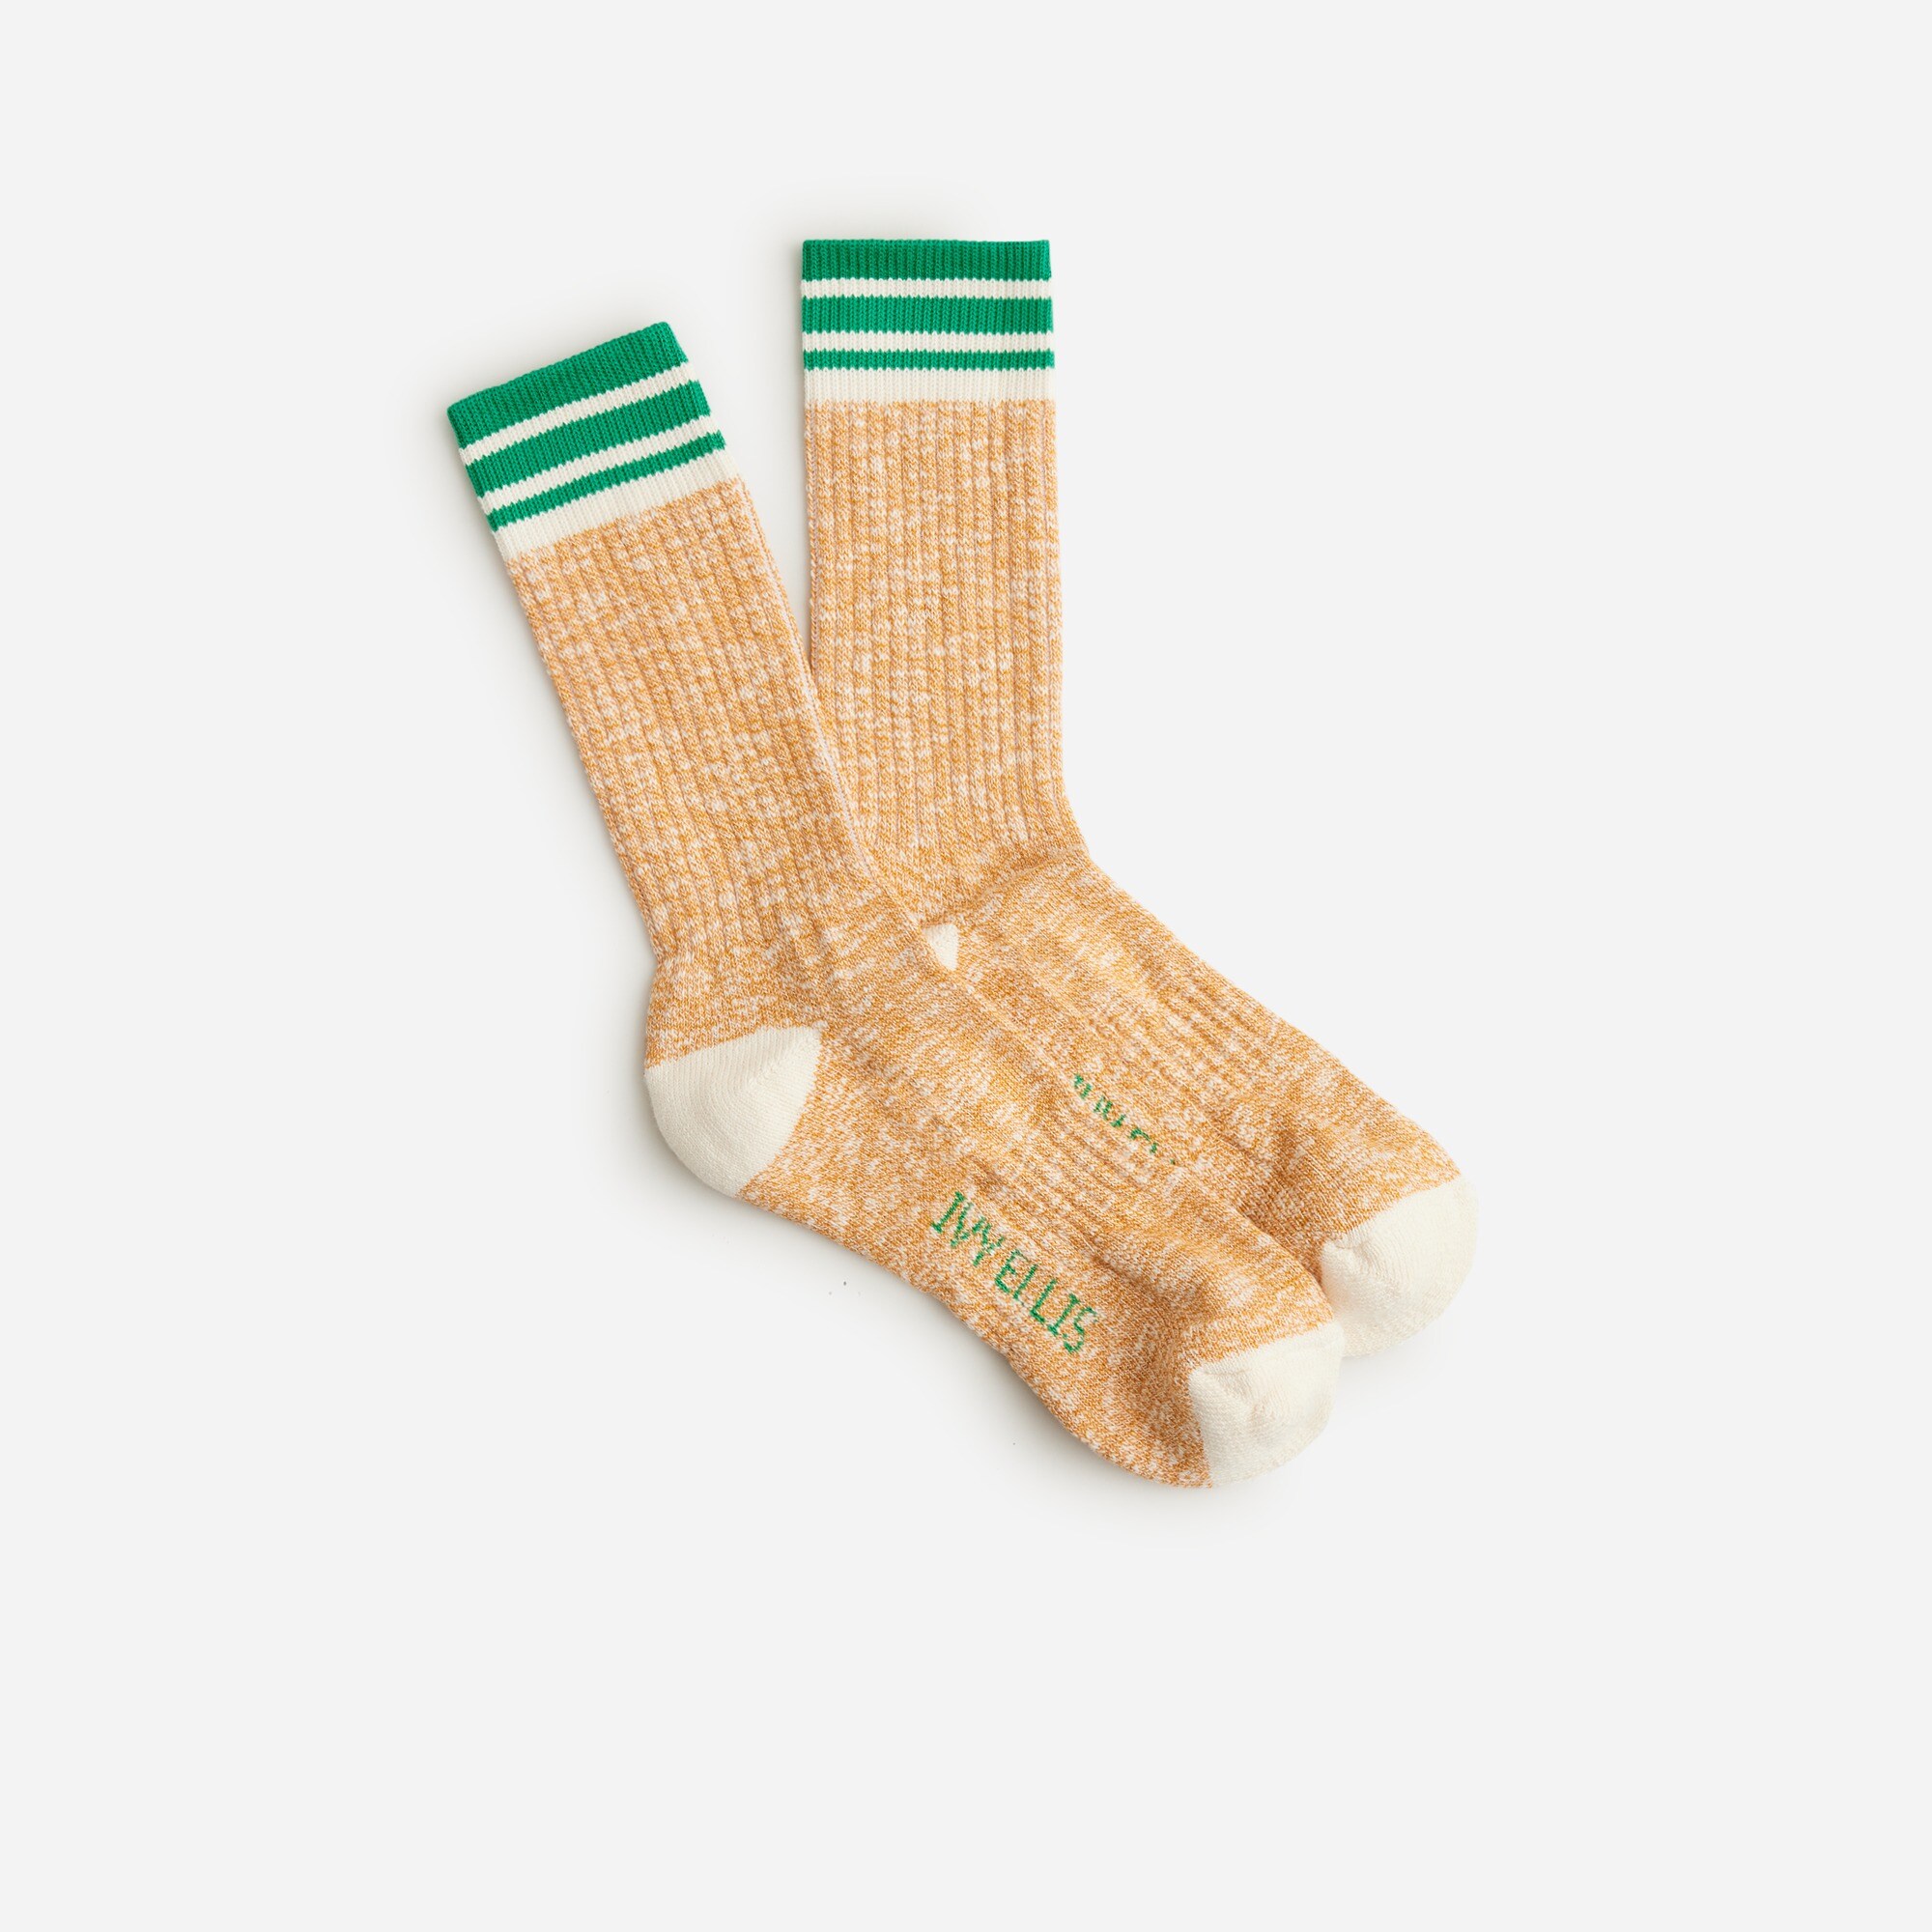  Ivy Ellis Gairloch socks in slub cotton